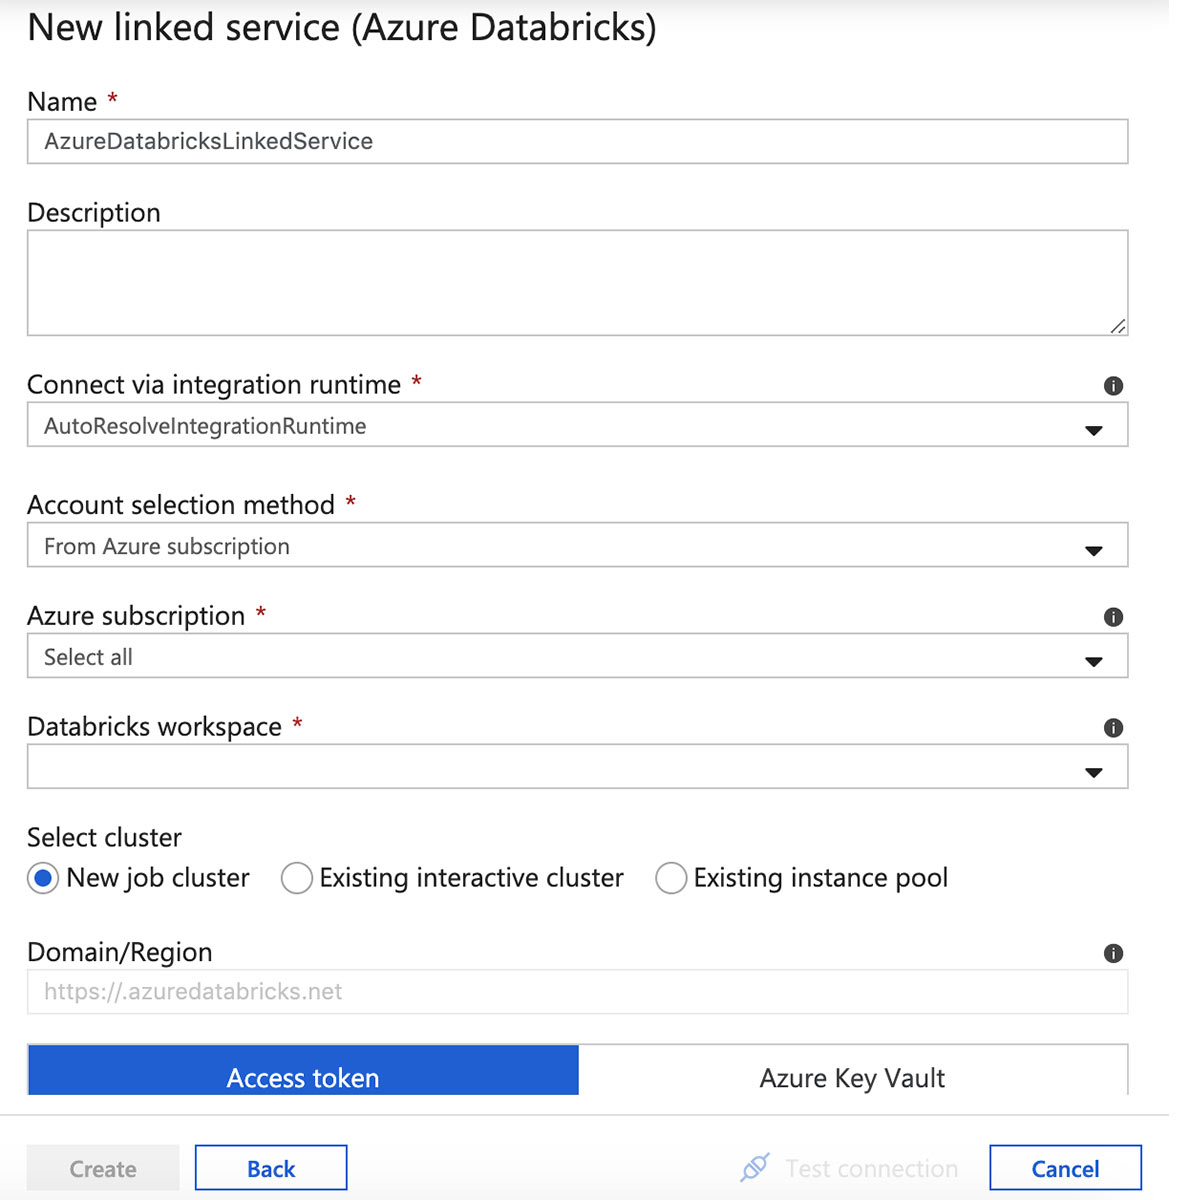 Name the Azure Databricks linked service